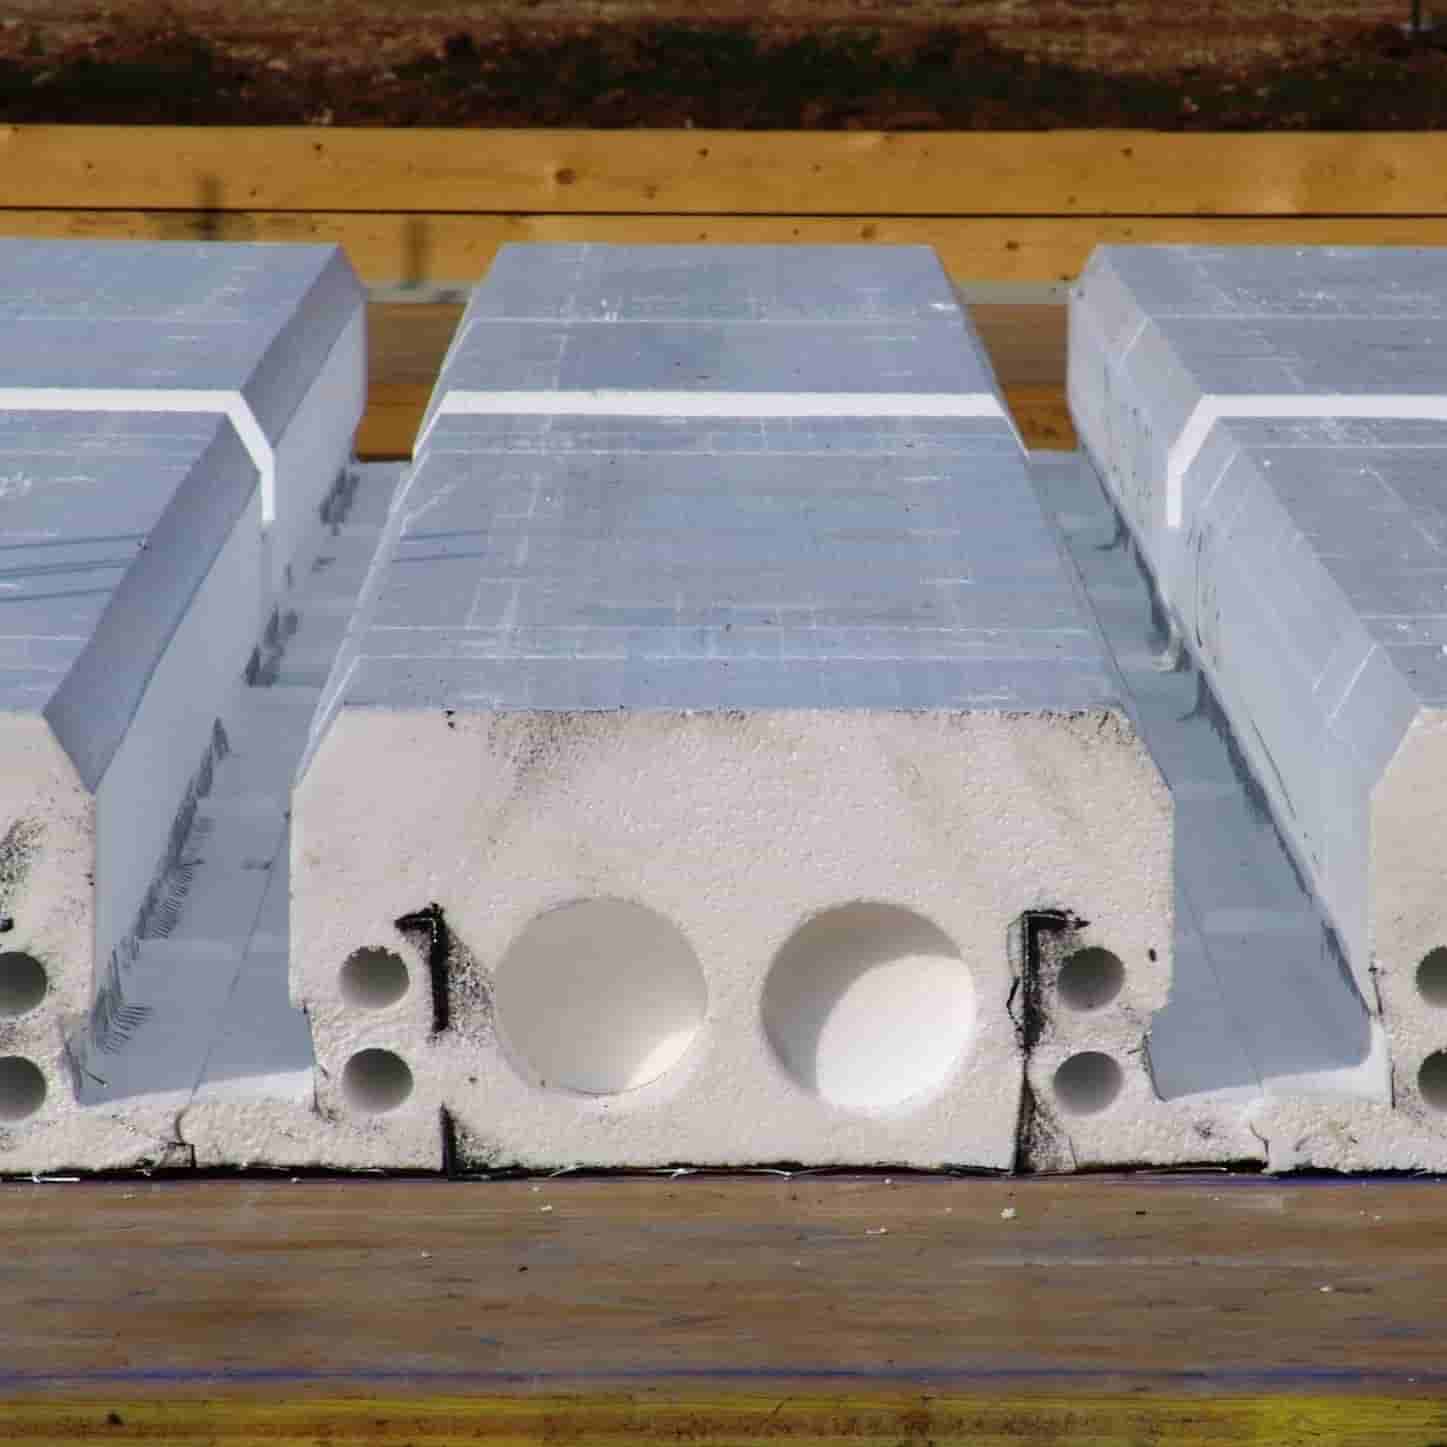 Advantages of polystyrene roof blocks